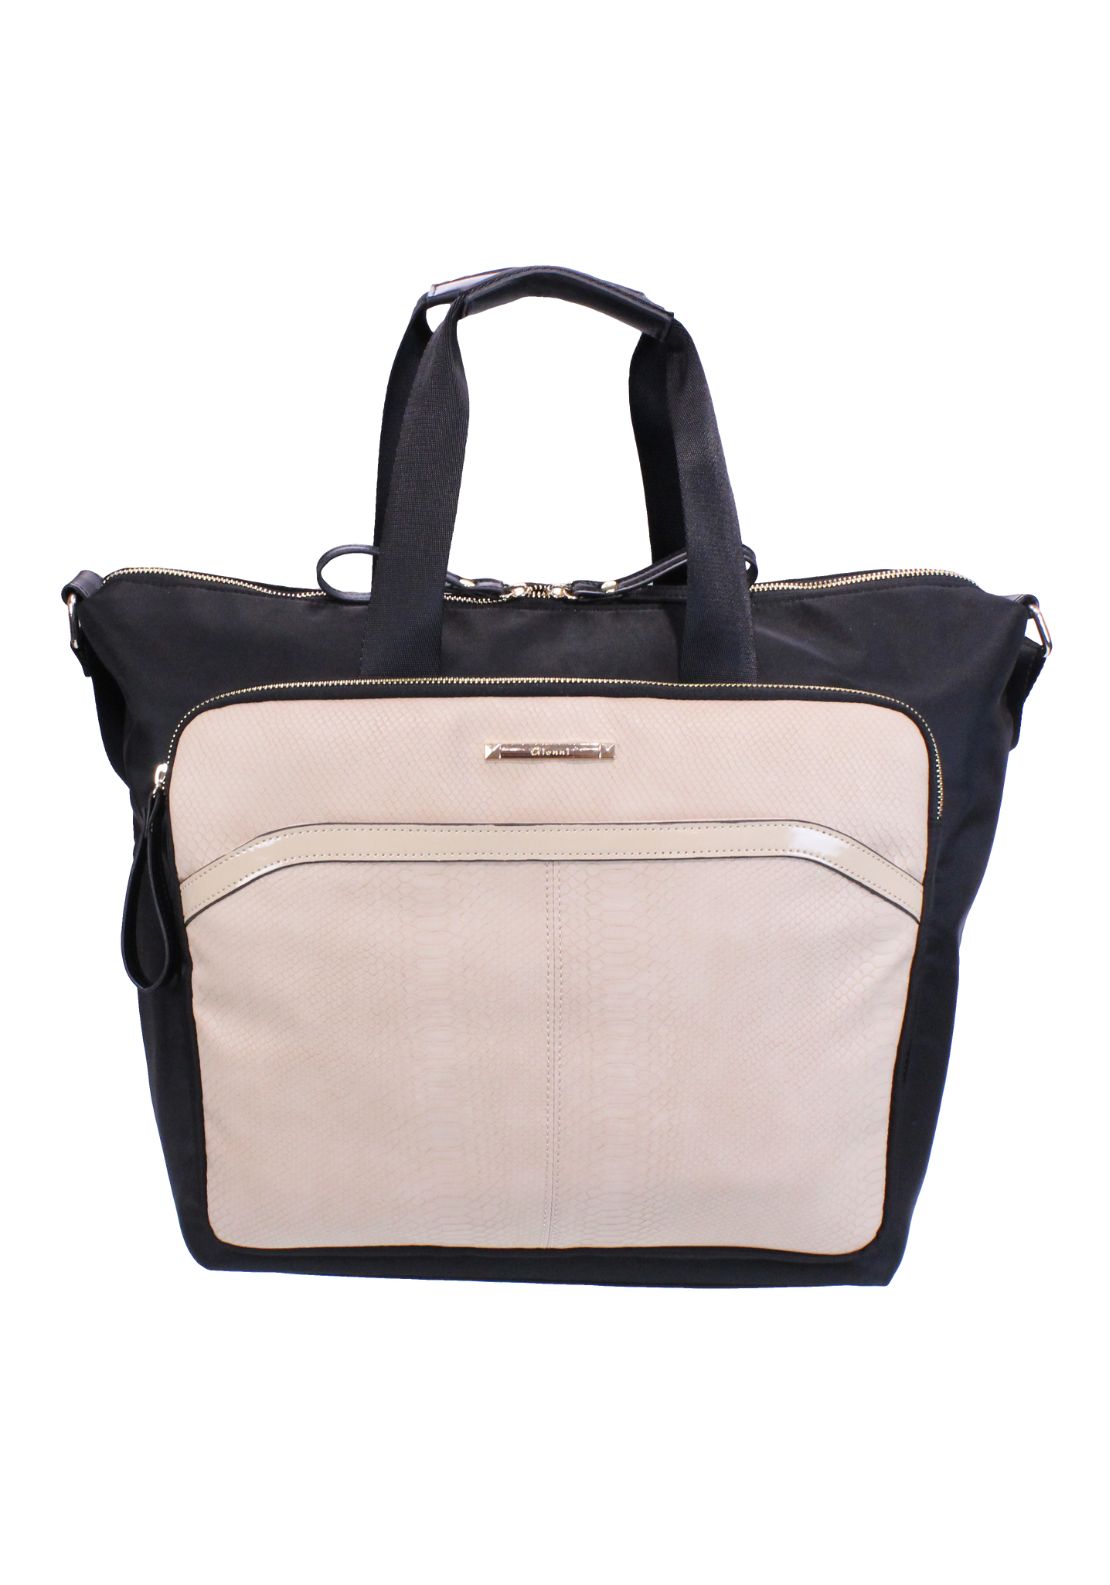 Gionni Fashion Luggage Bag - Nude 1 Shaws Department Stores